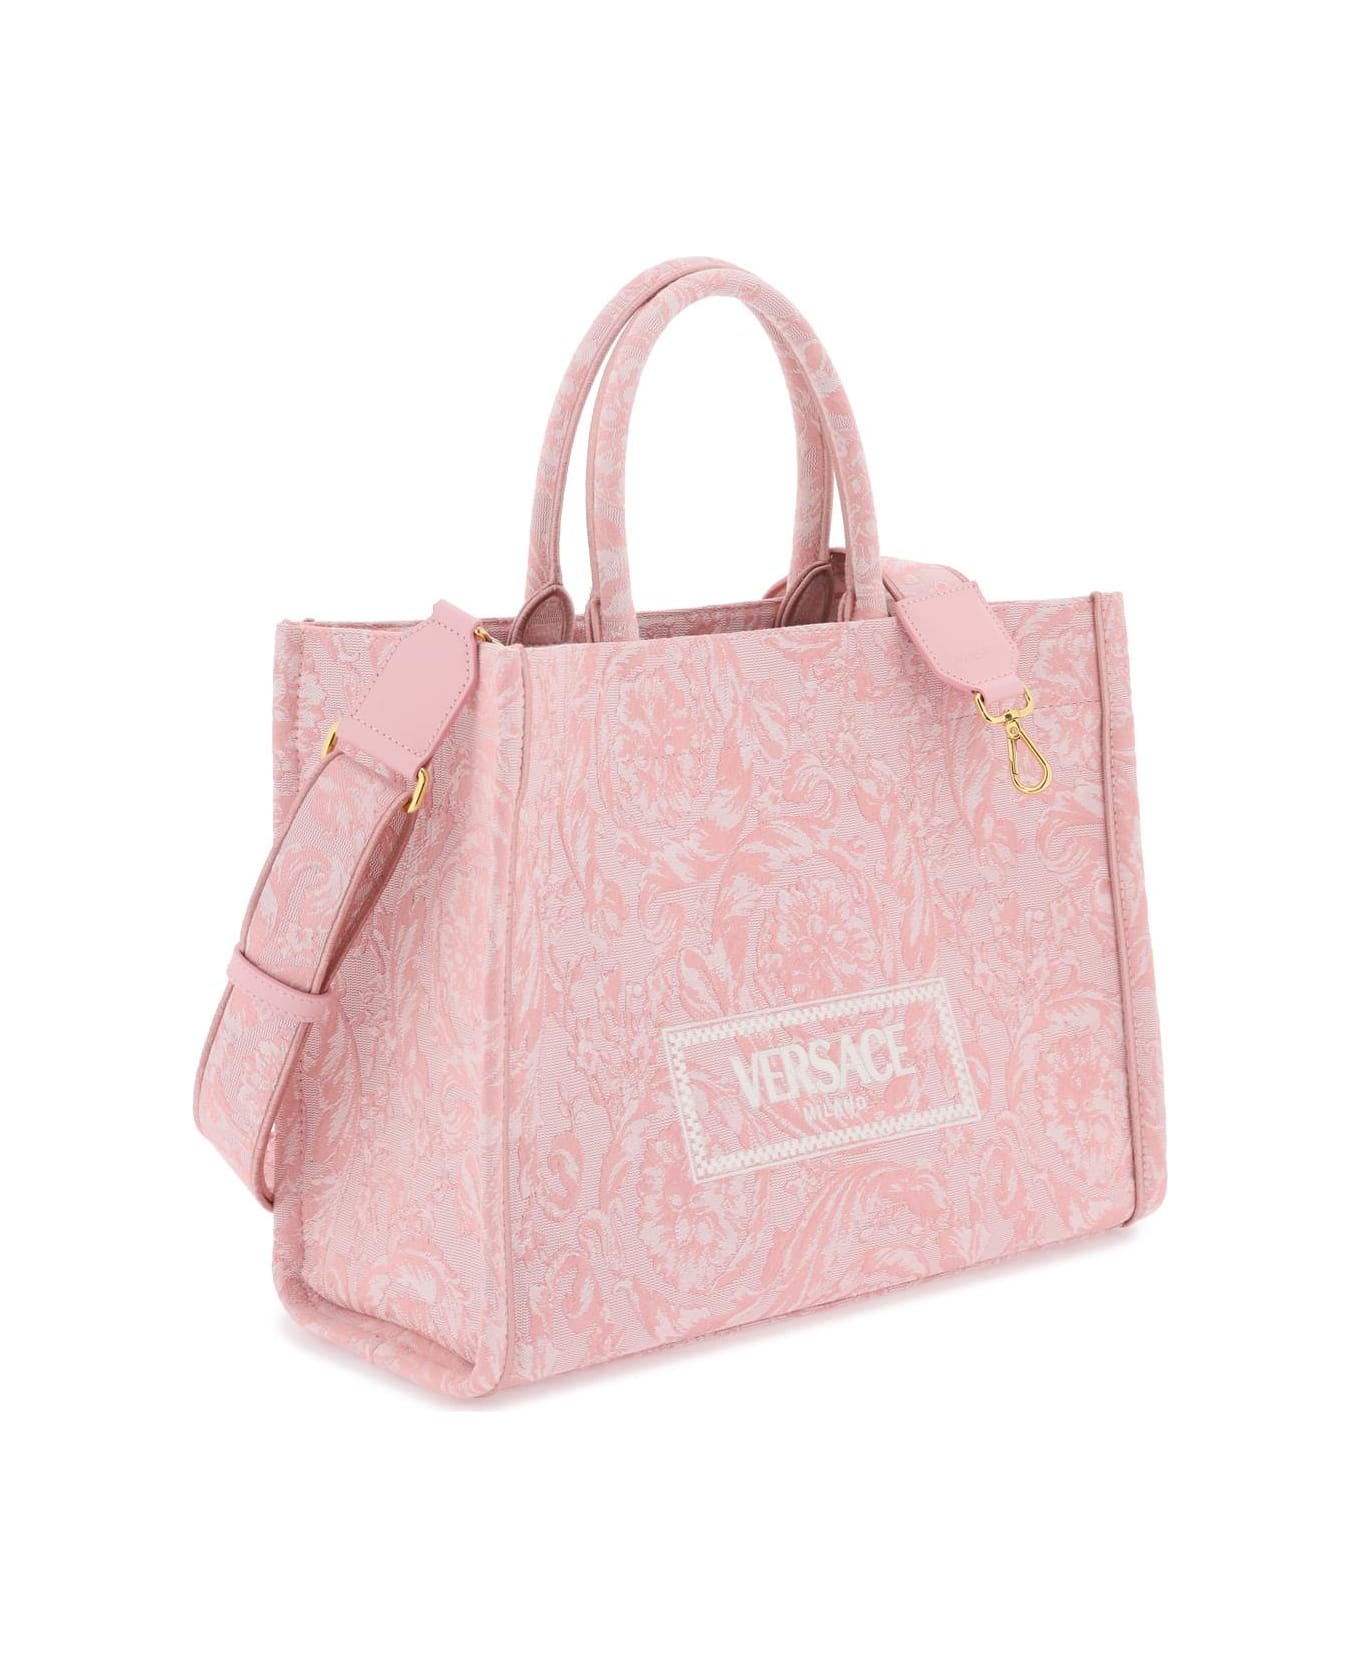 Versace Athena Handbag - Givenchy medium Whip shoulder bag